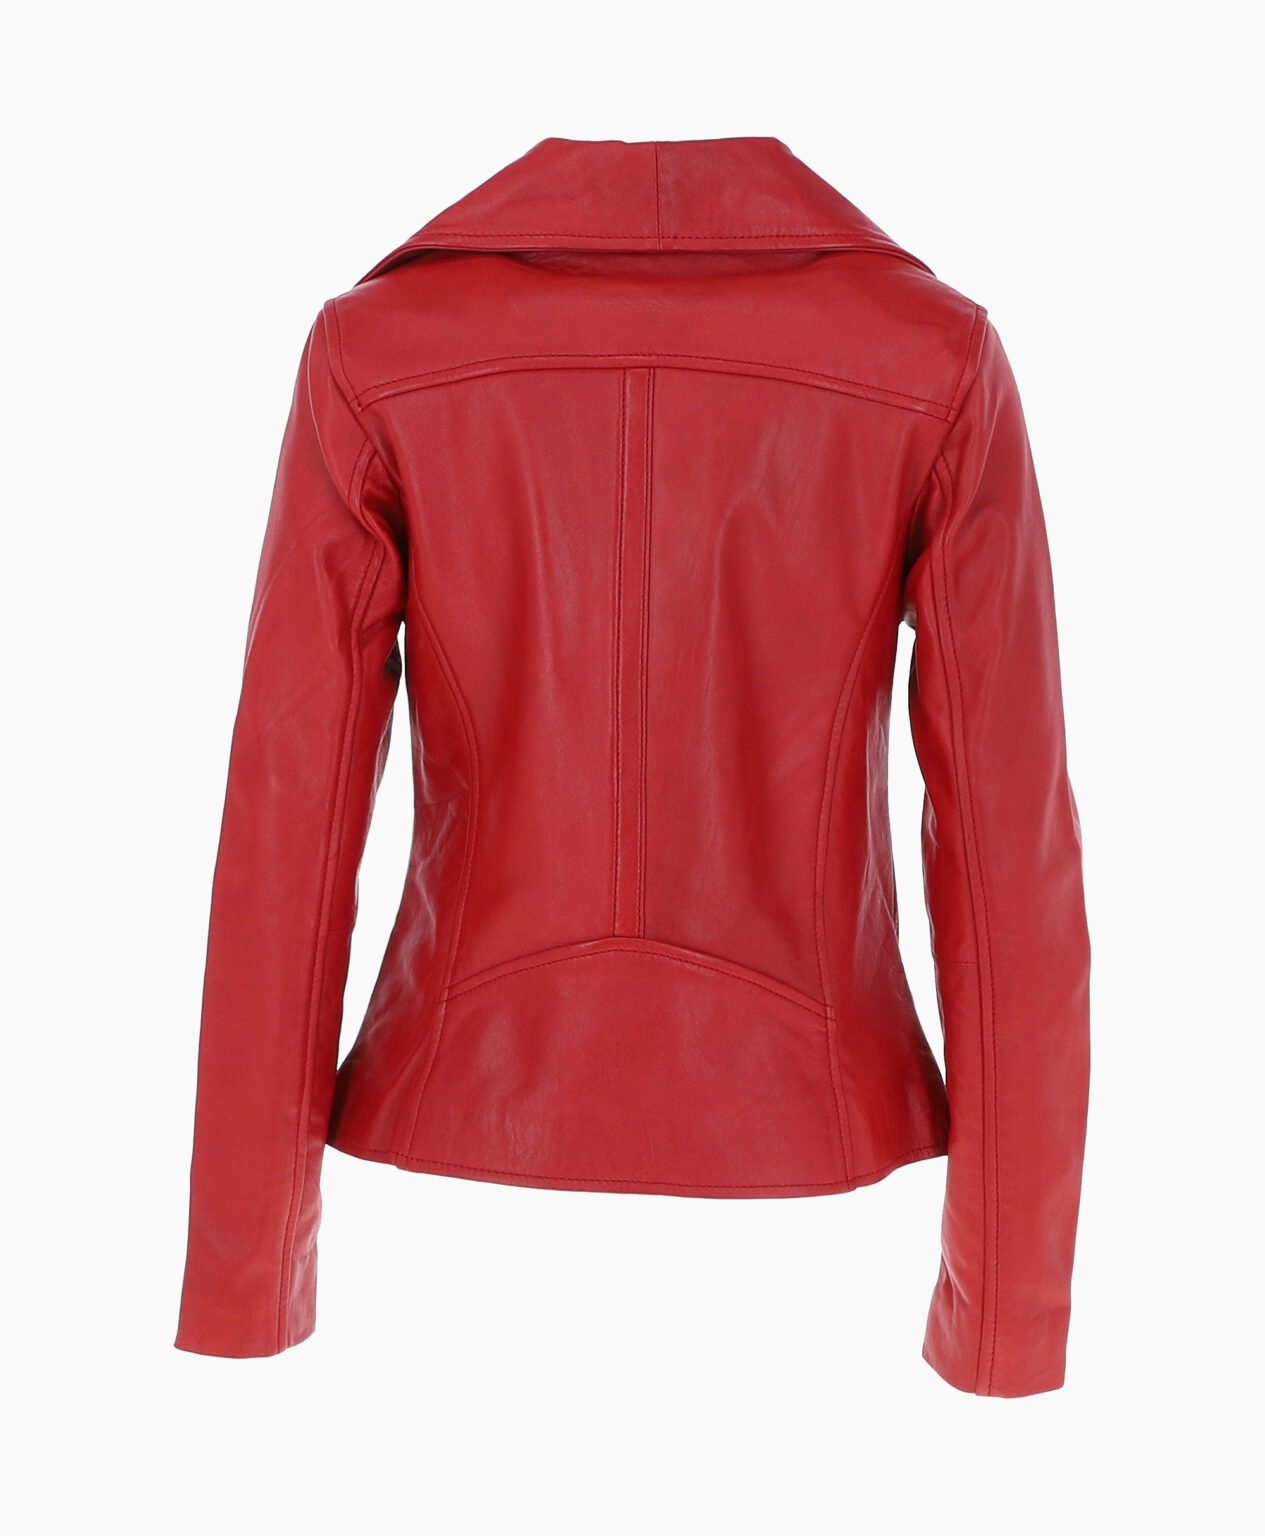 vogue-jacket-leather-jacket-fashion-collar-red-shelby-image202